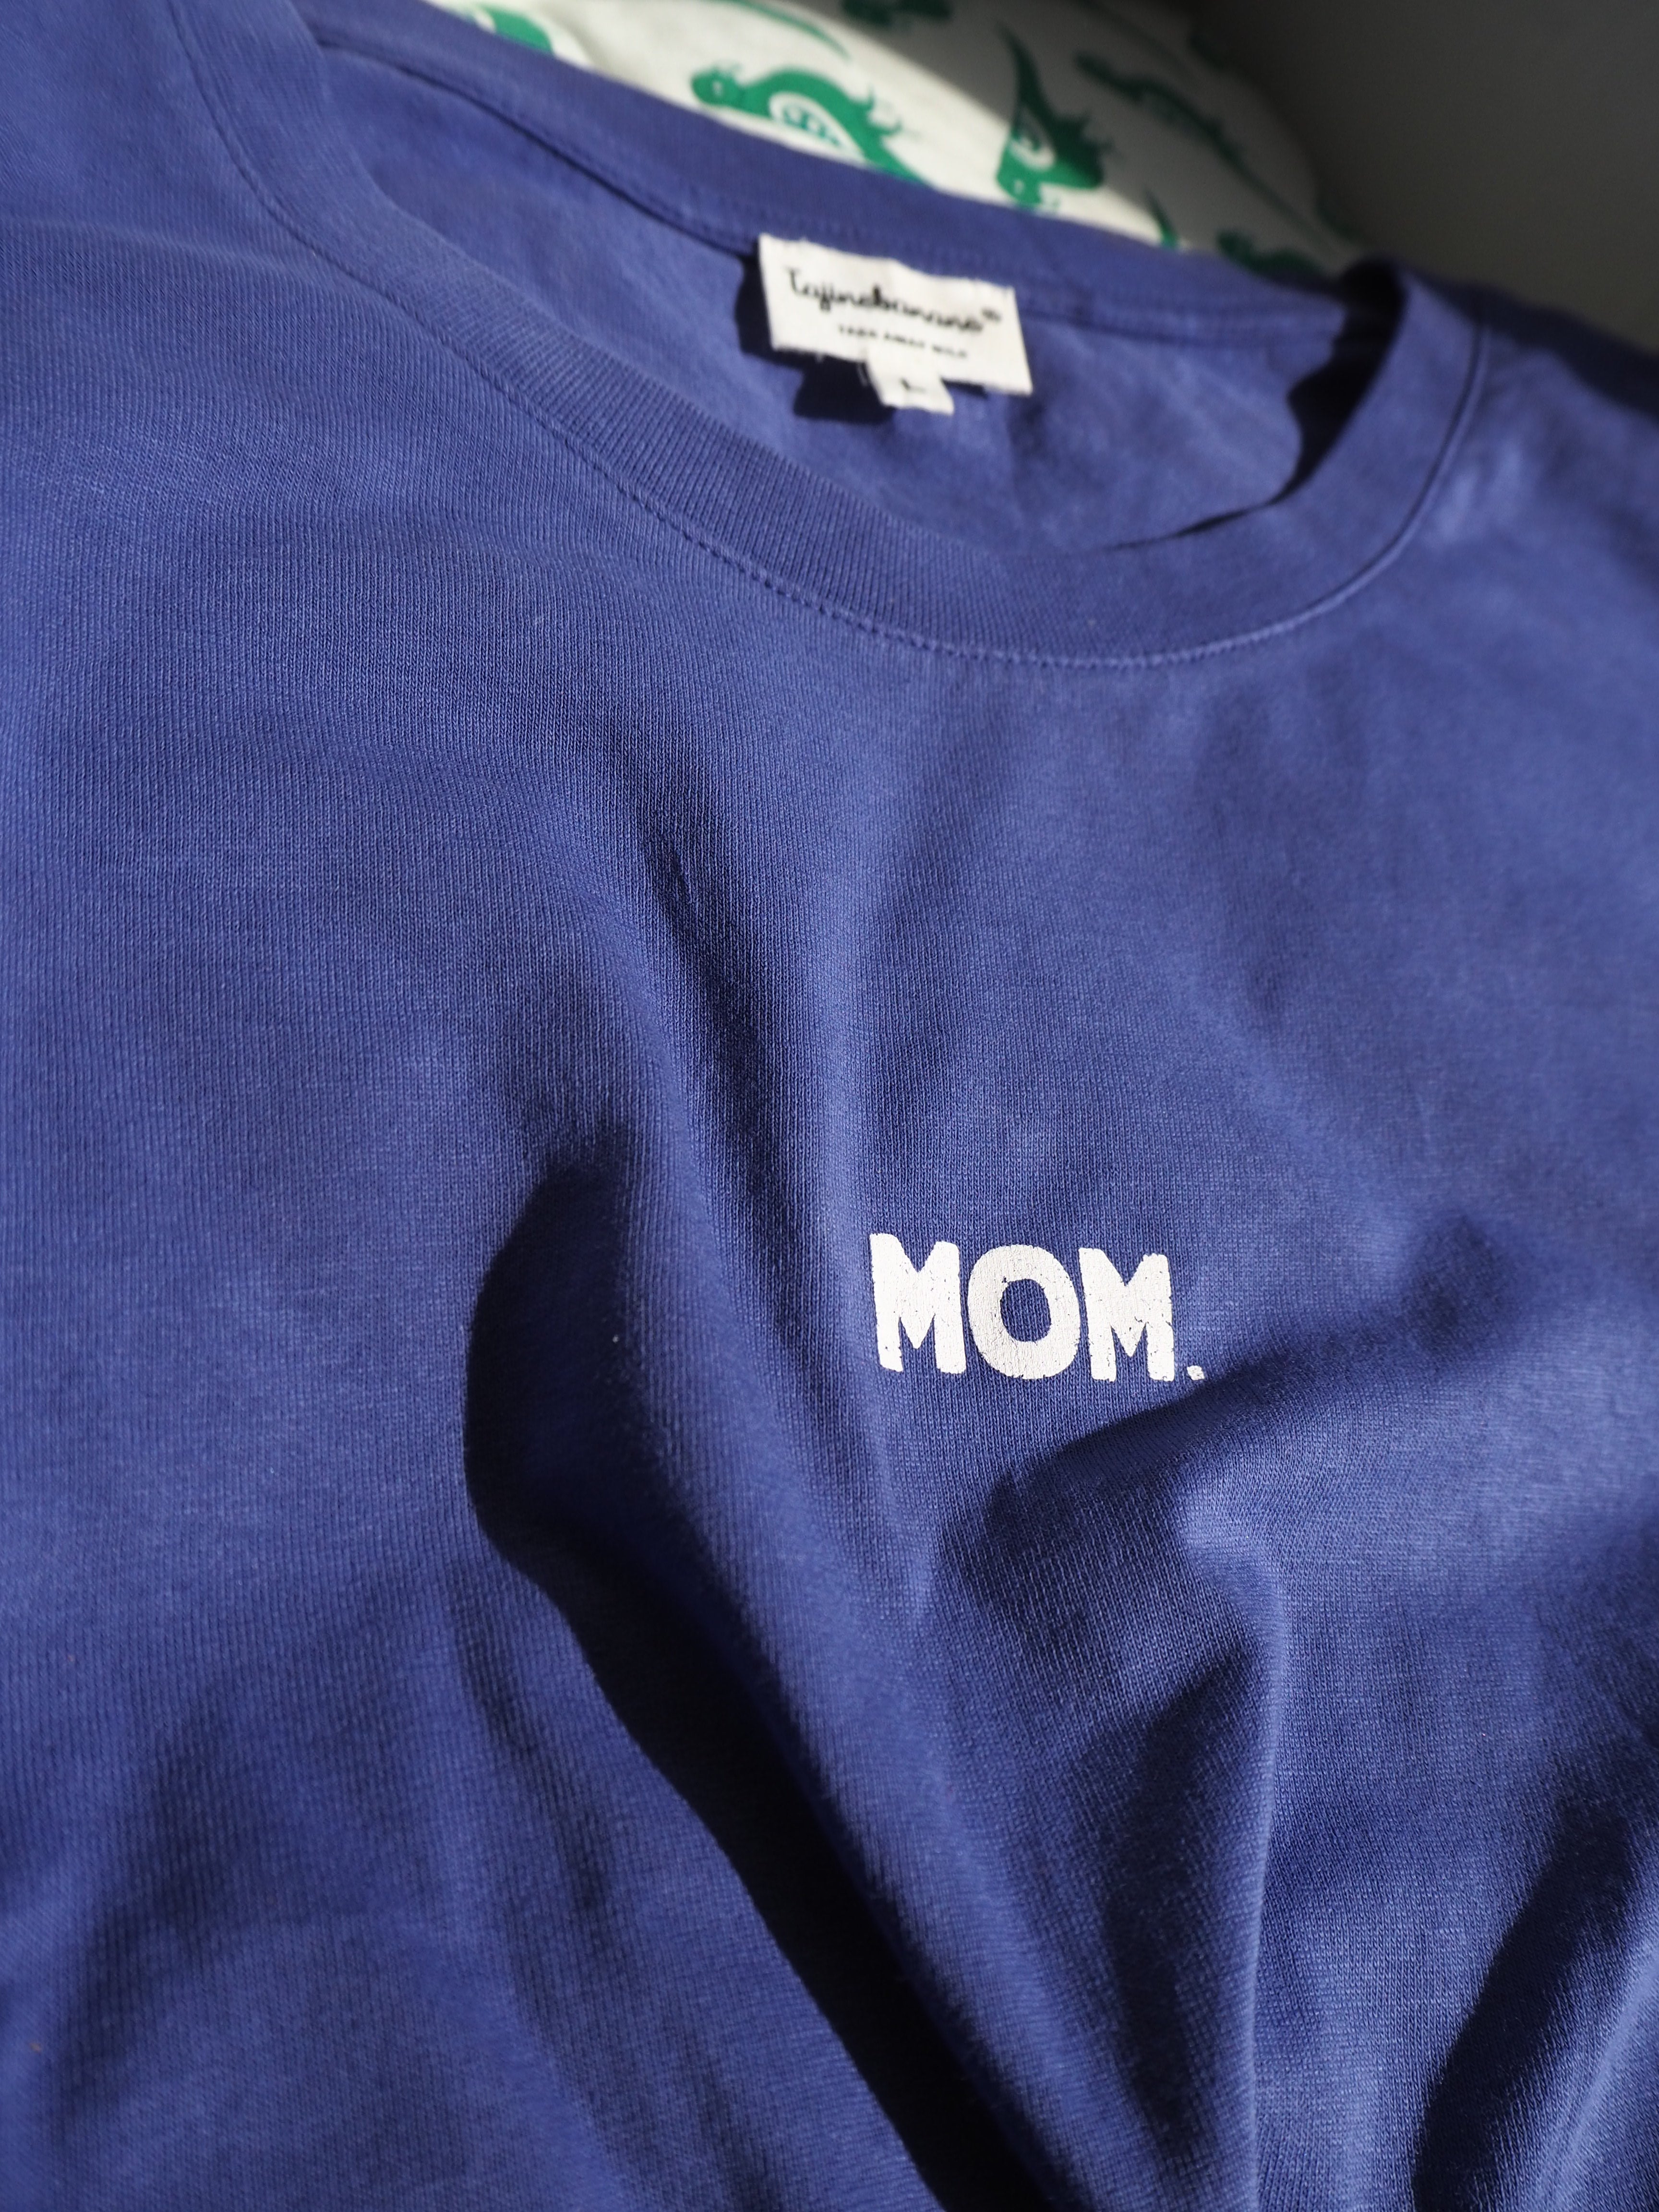 Non Breastfeeding MOM T-Shirt